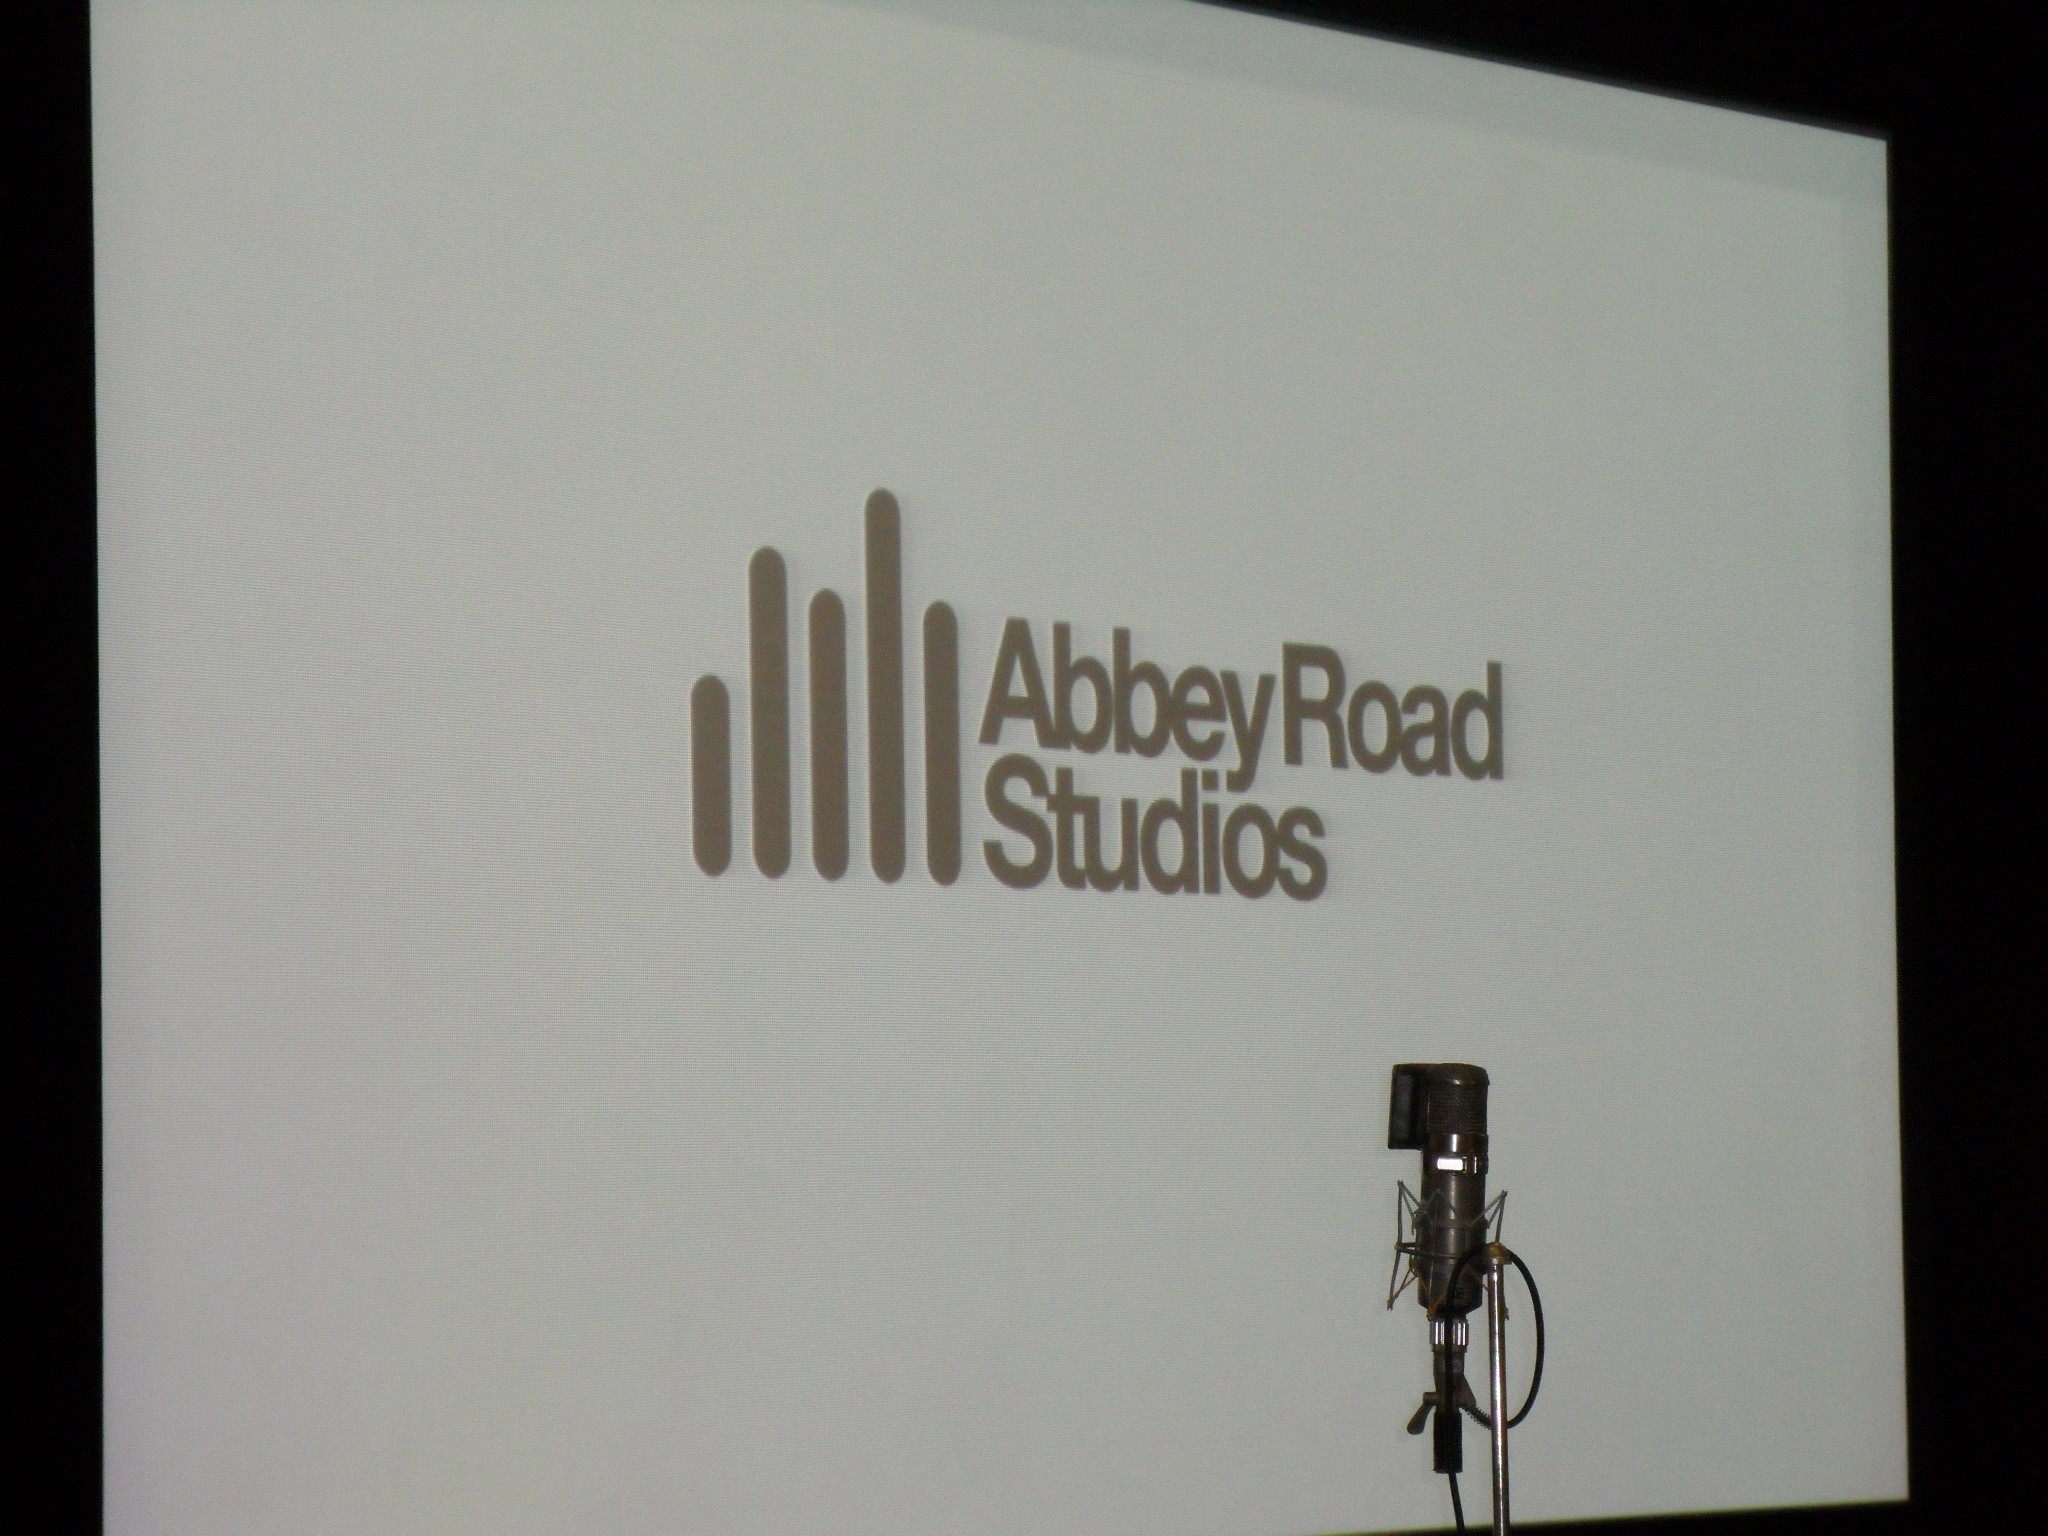 2048x1536 File:Abbey Road Studios, logo & microphone.jpg